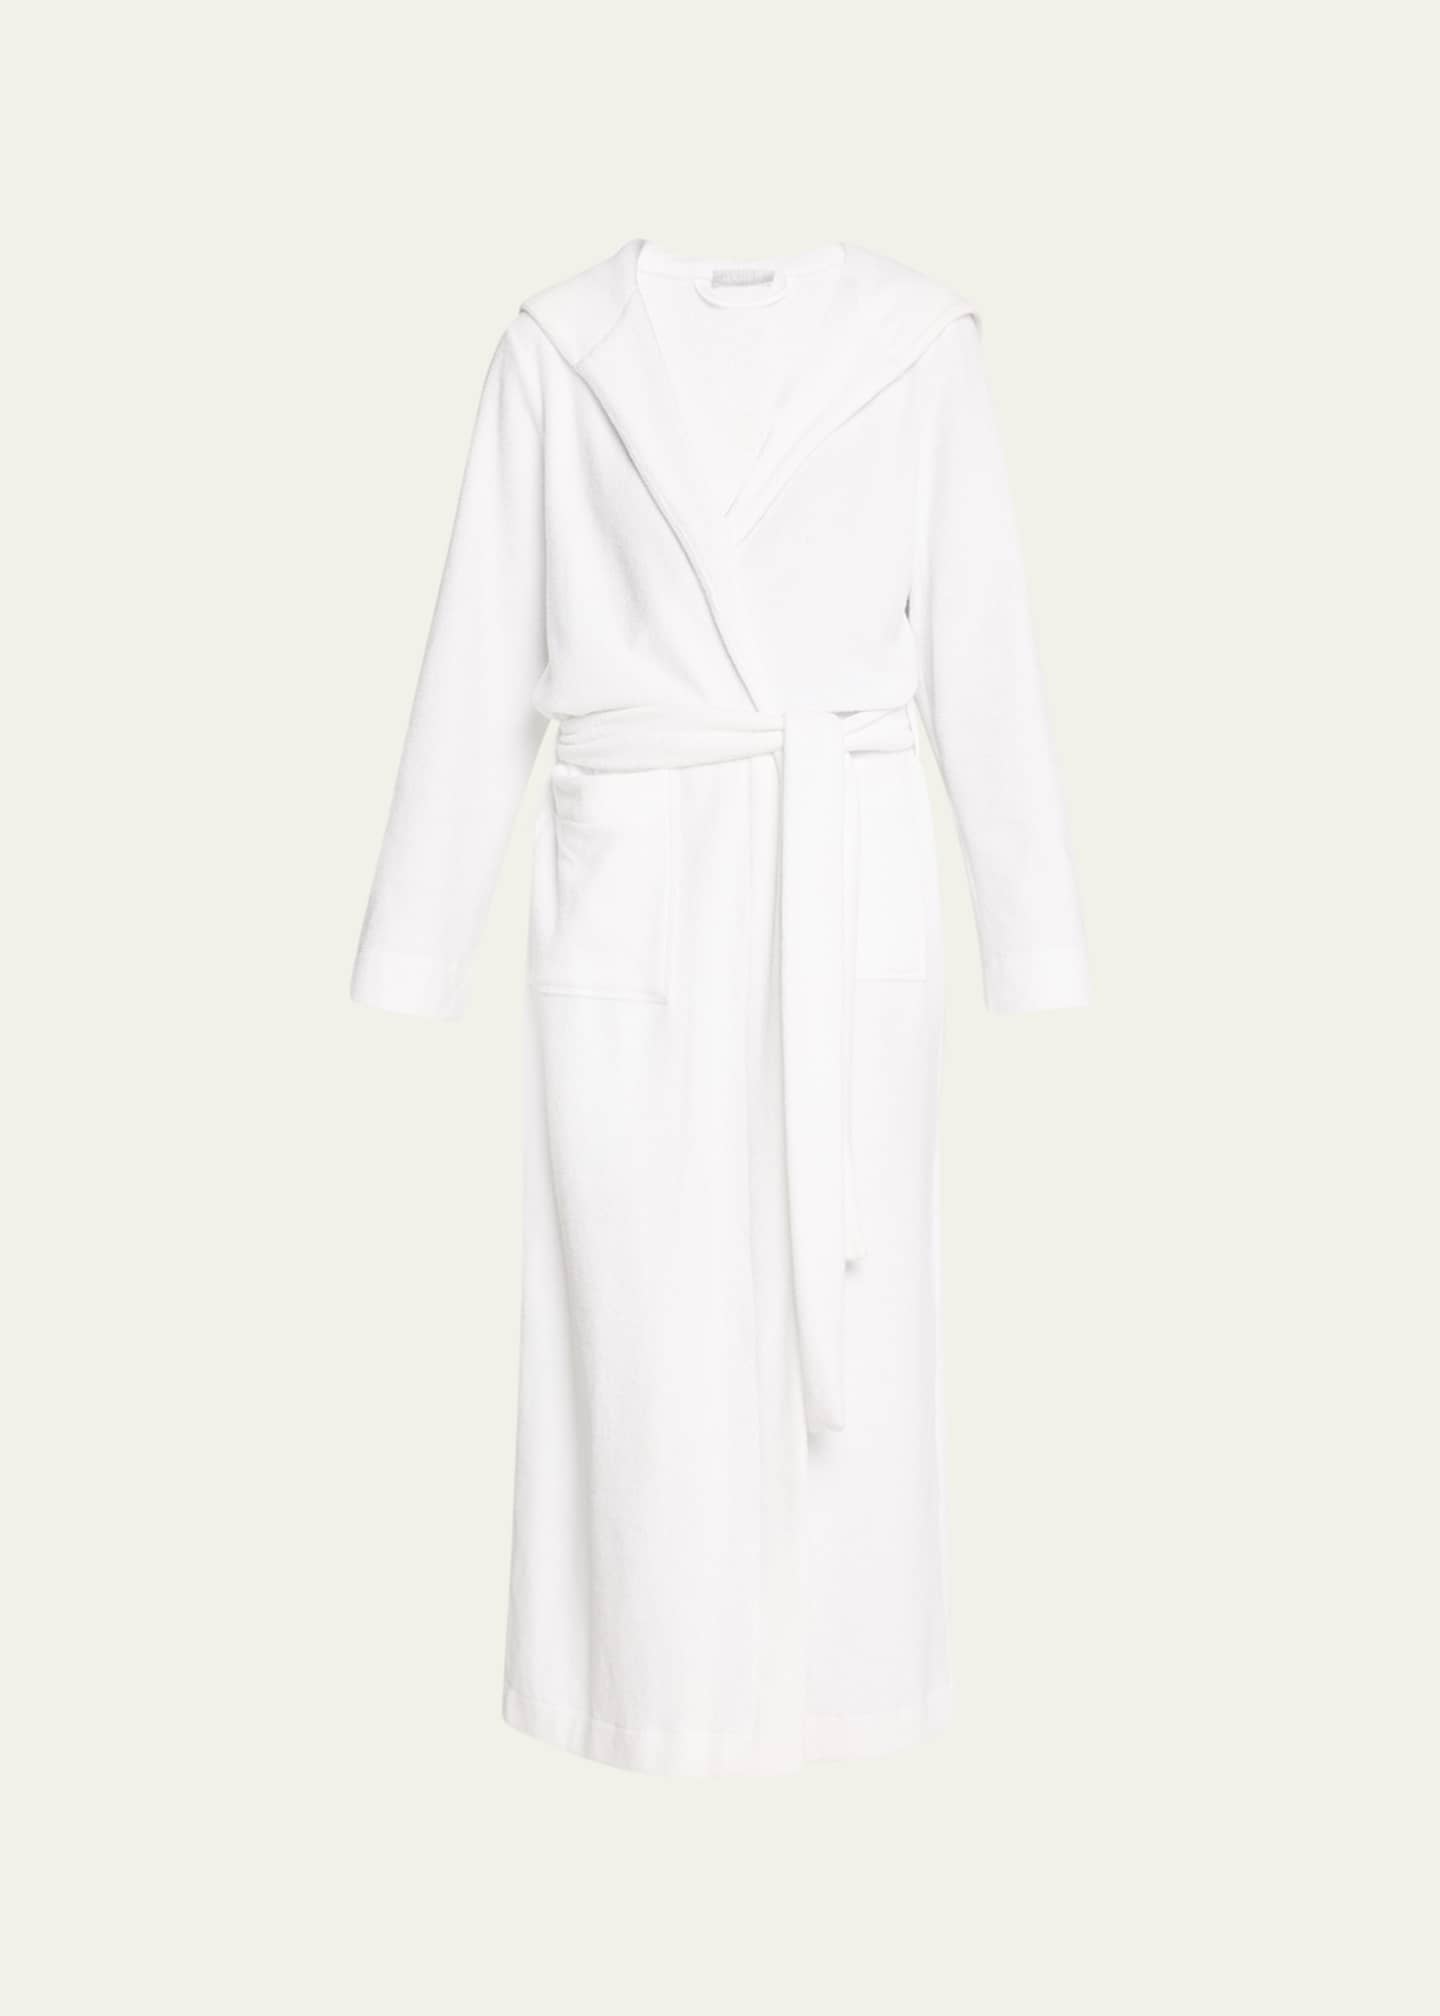 Hanro Hooded Plush Long Robe Image 1 of 5